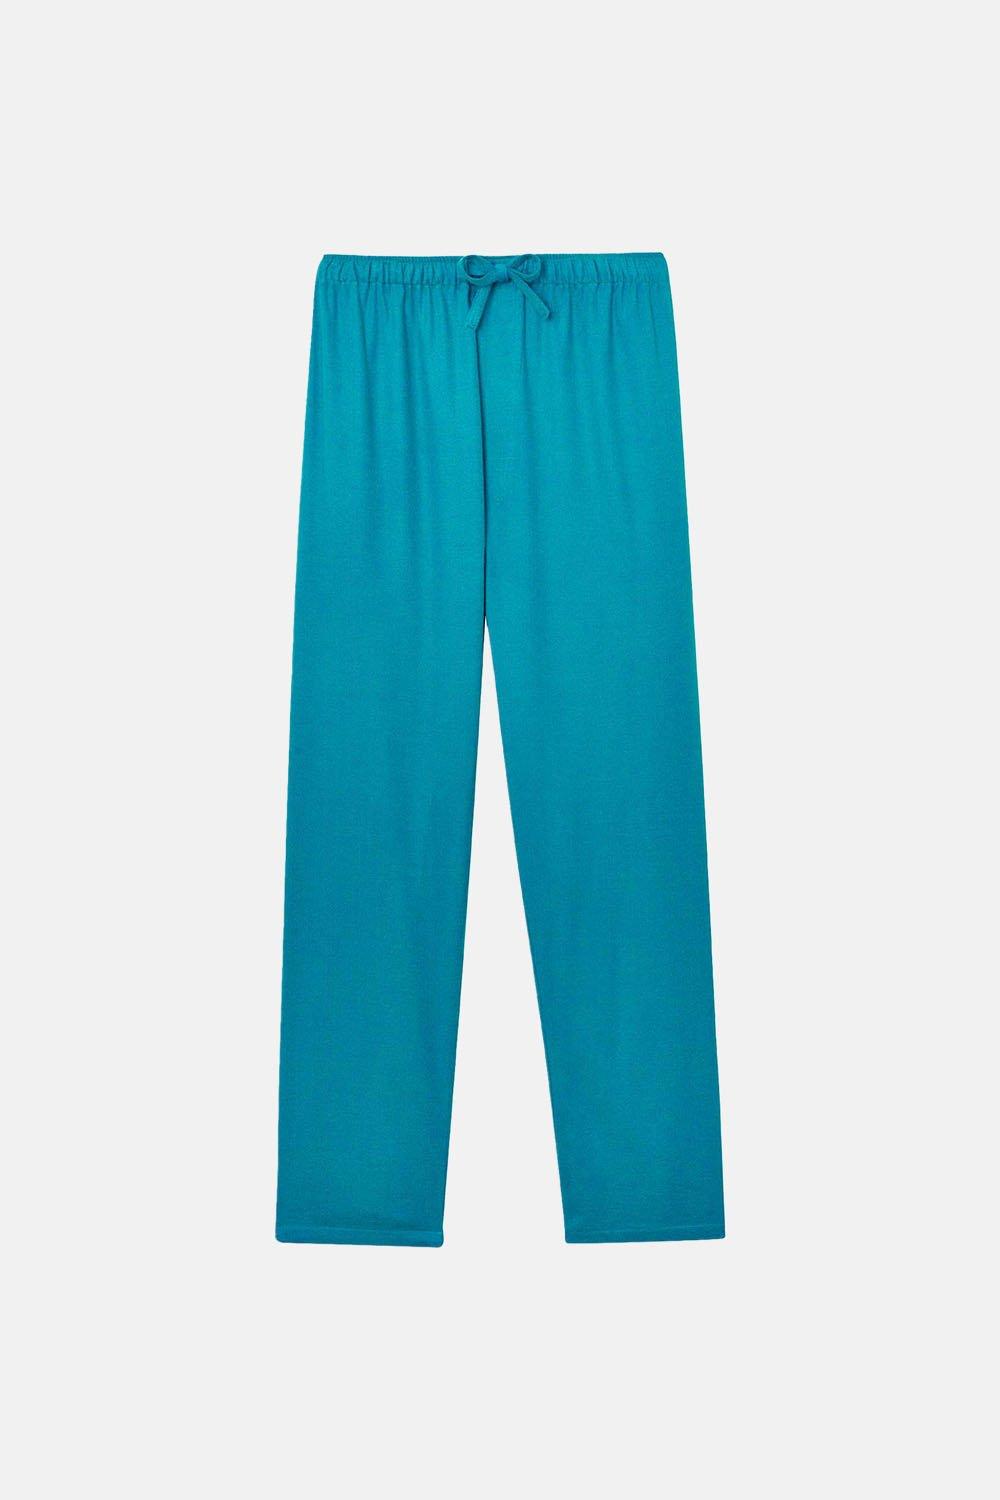 'Storm' Herringbone Brushed Cotton Pyjama Trousers